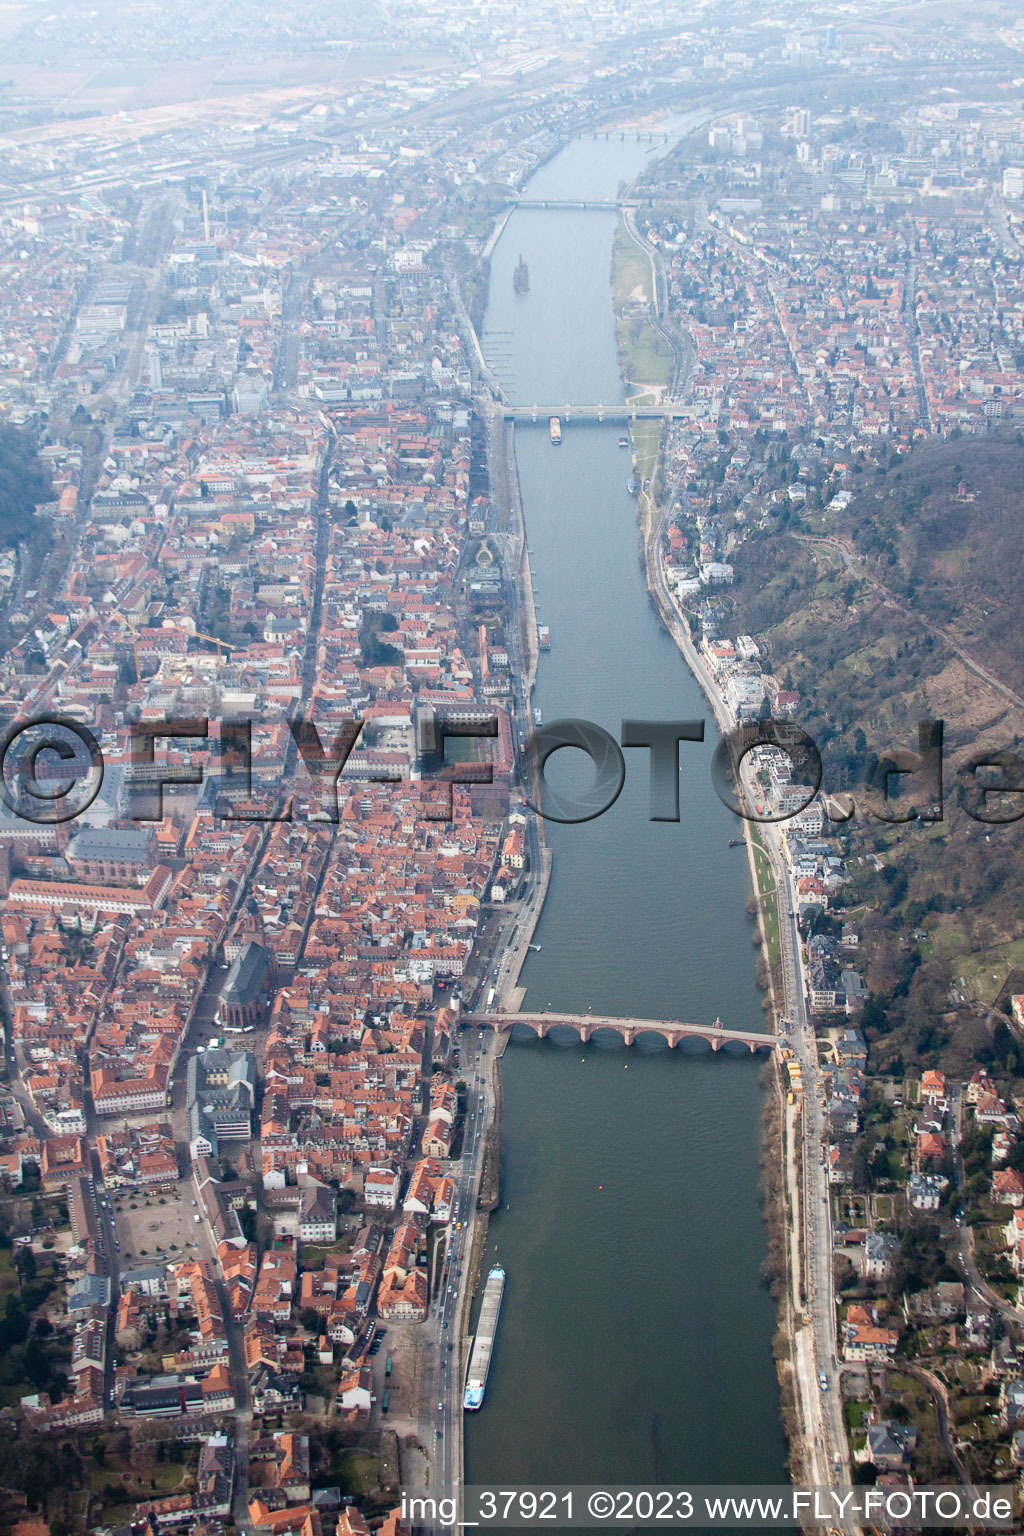 Altstadt, Alte Brücke über den Neckar im Ortsteil Kernaltstadt in Heidelberg im Bundesland Baden-Württemberg, Deutschland